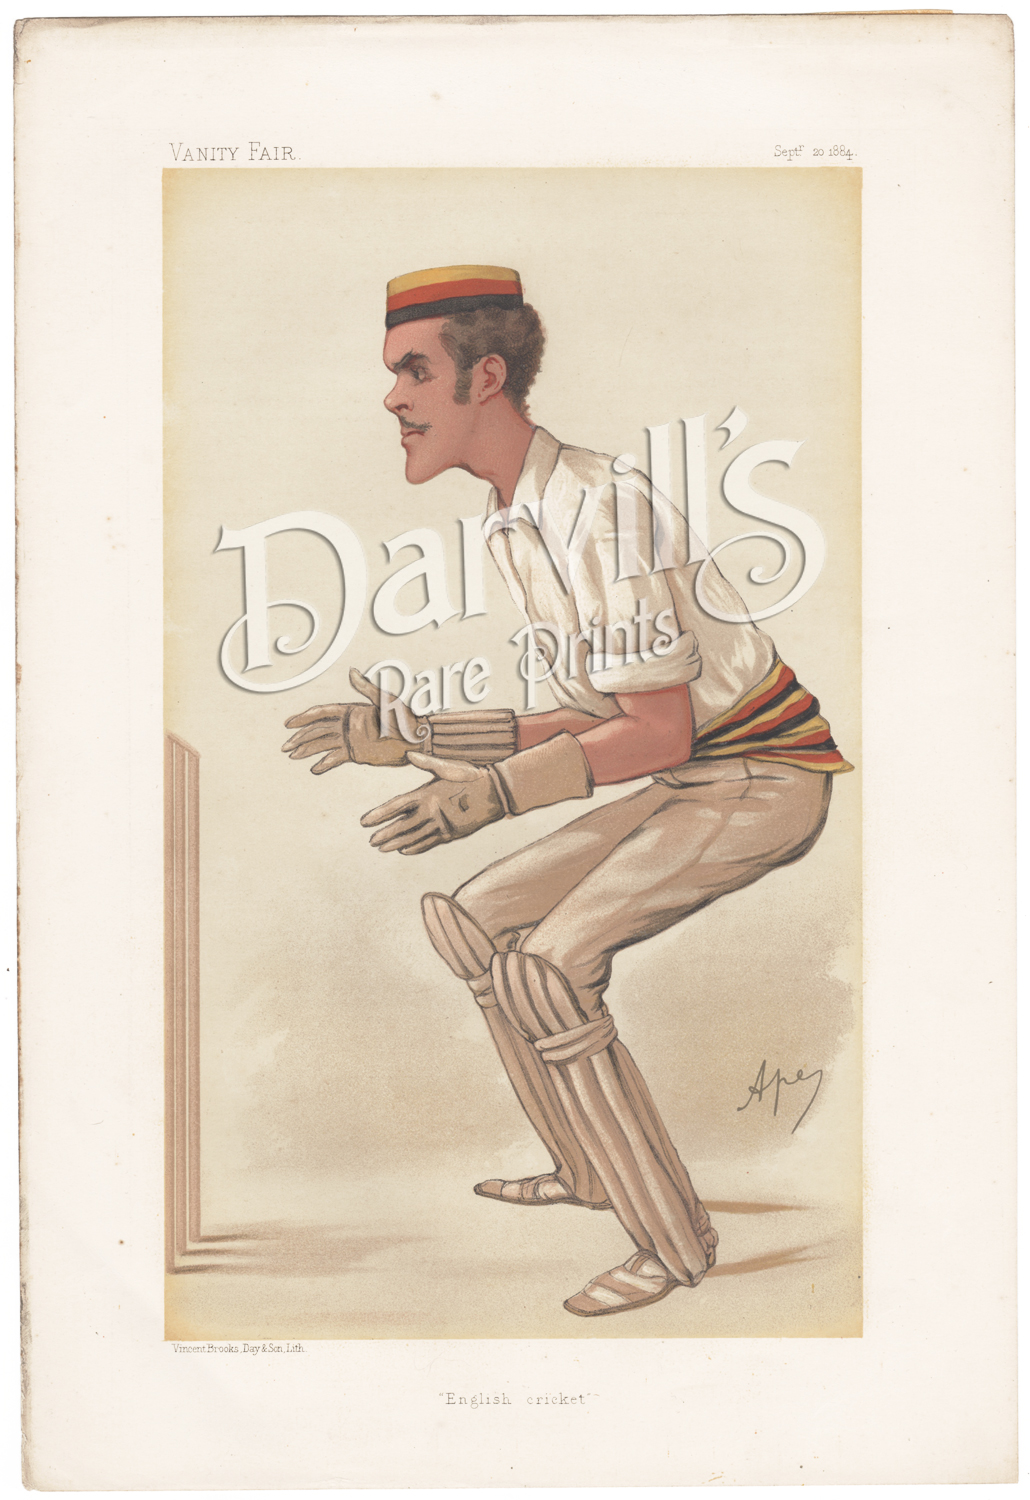 Alfred Lyttelton Sept 20 1884 English Cricket